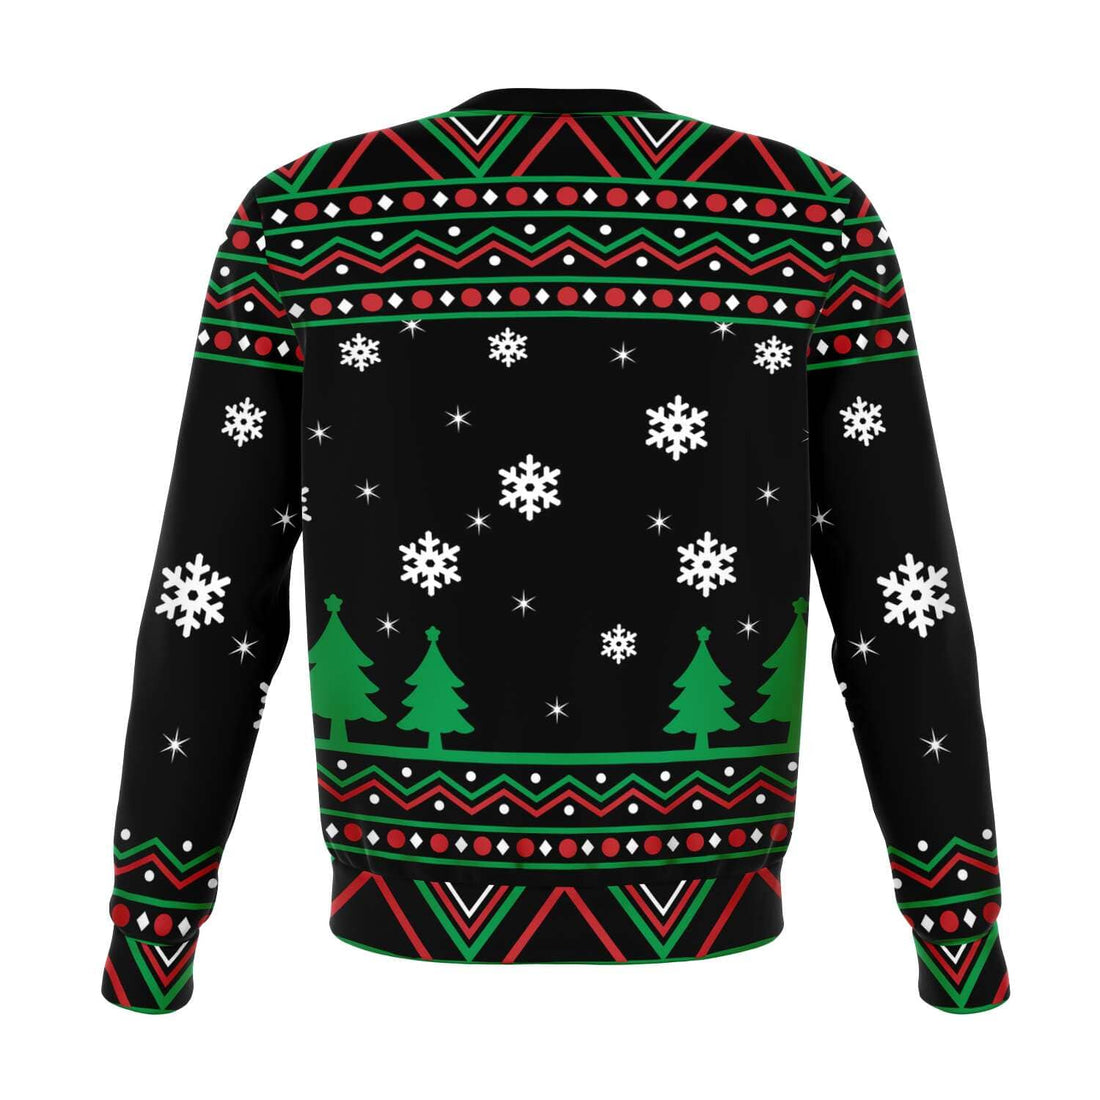 Kate McEnroe New York Brew Dolph Ugly Christmas SweaterSweatshirtSBSWF_D - 4561 - XS